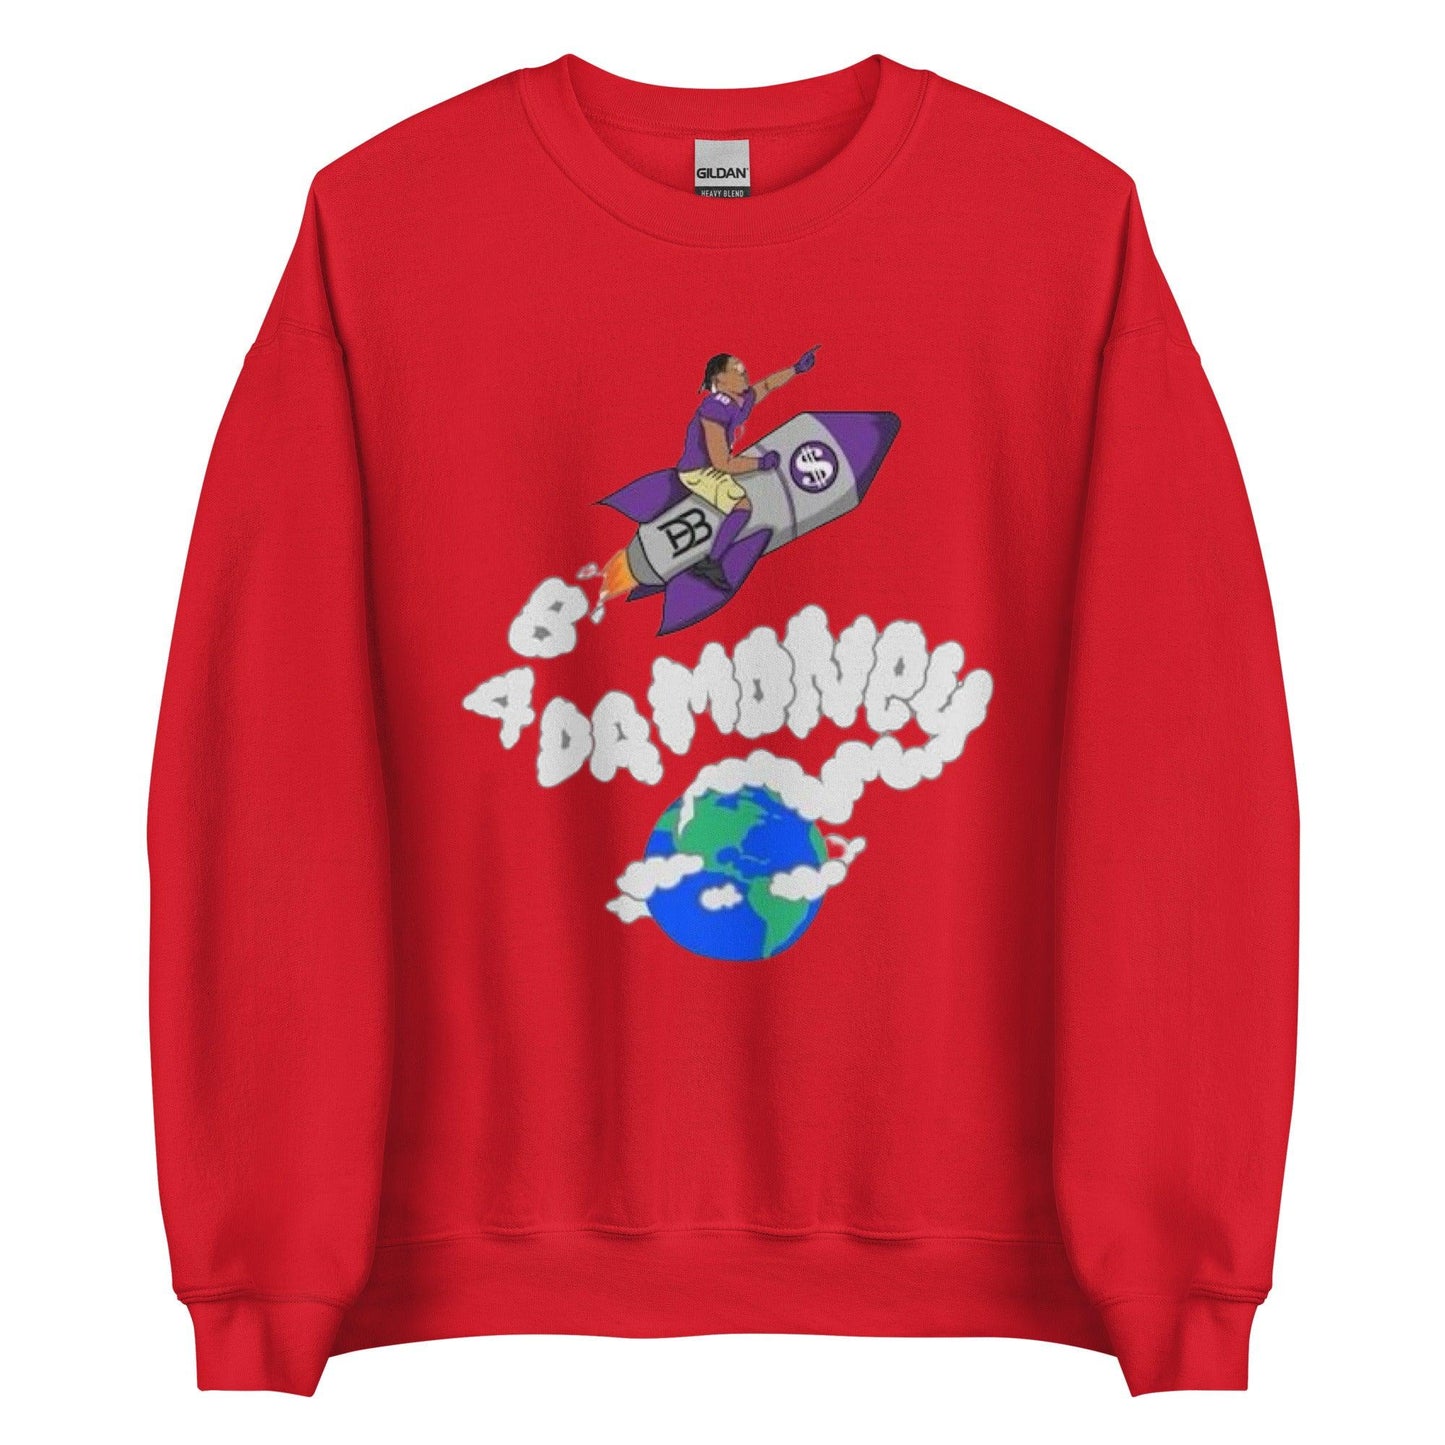 Davon Banks "B 4 DAMONEY" Sweatshirt - Fan Arch